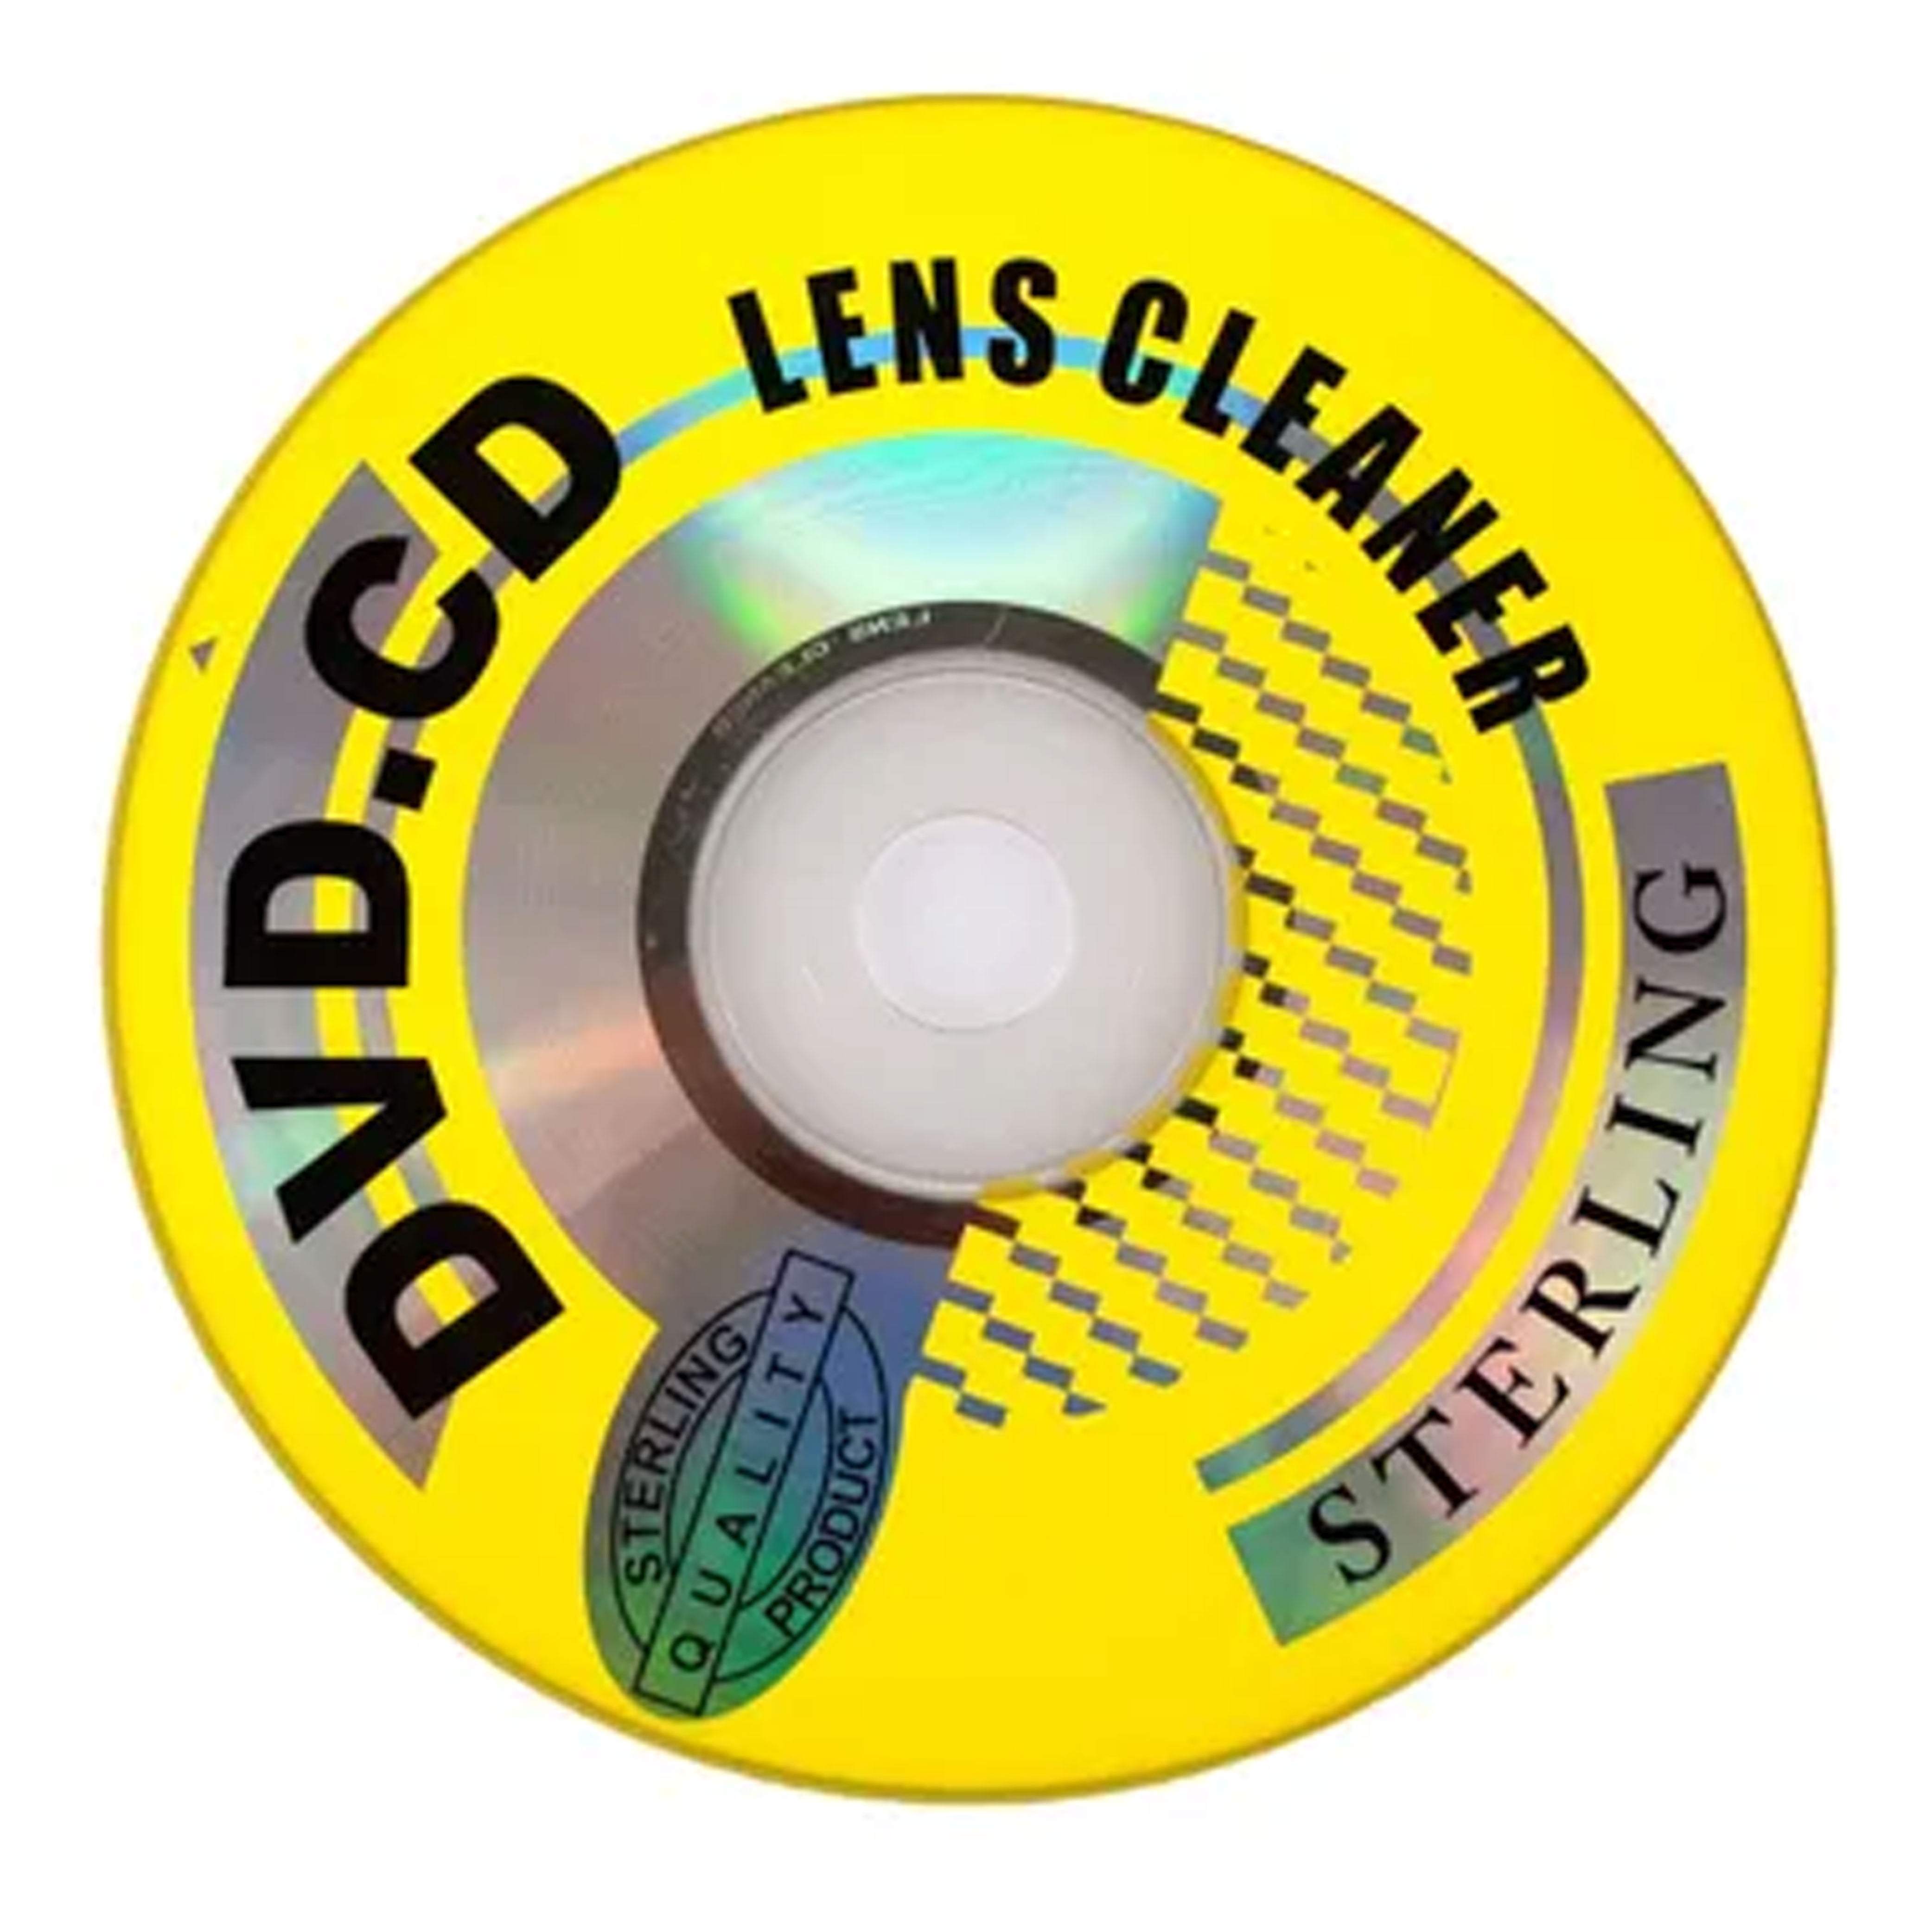 POWERCLEAN Optikal Kleener - Screen, Lens & Disc Cleaning Kit